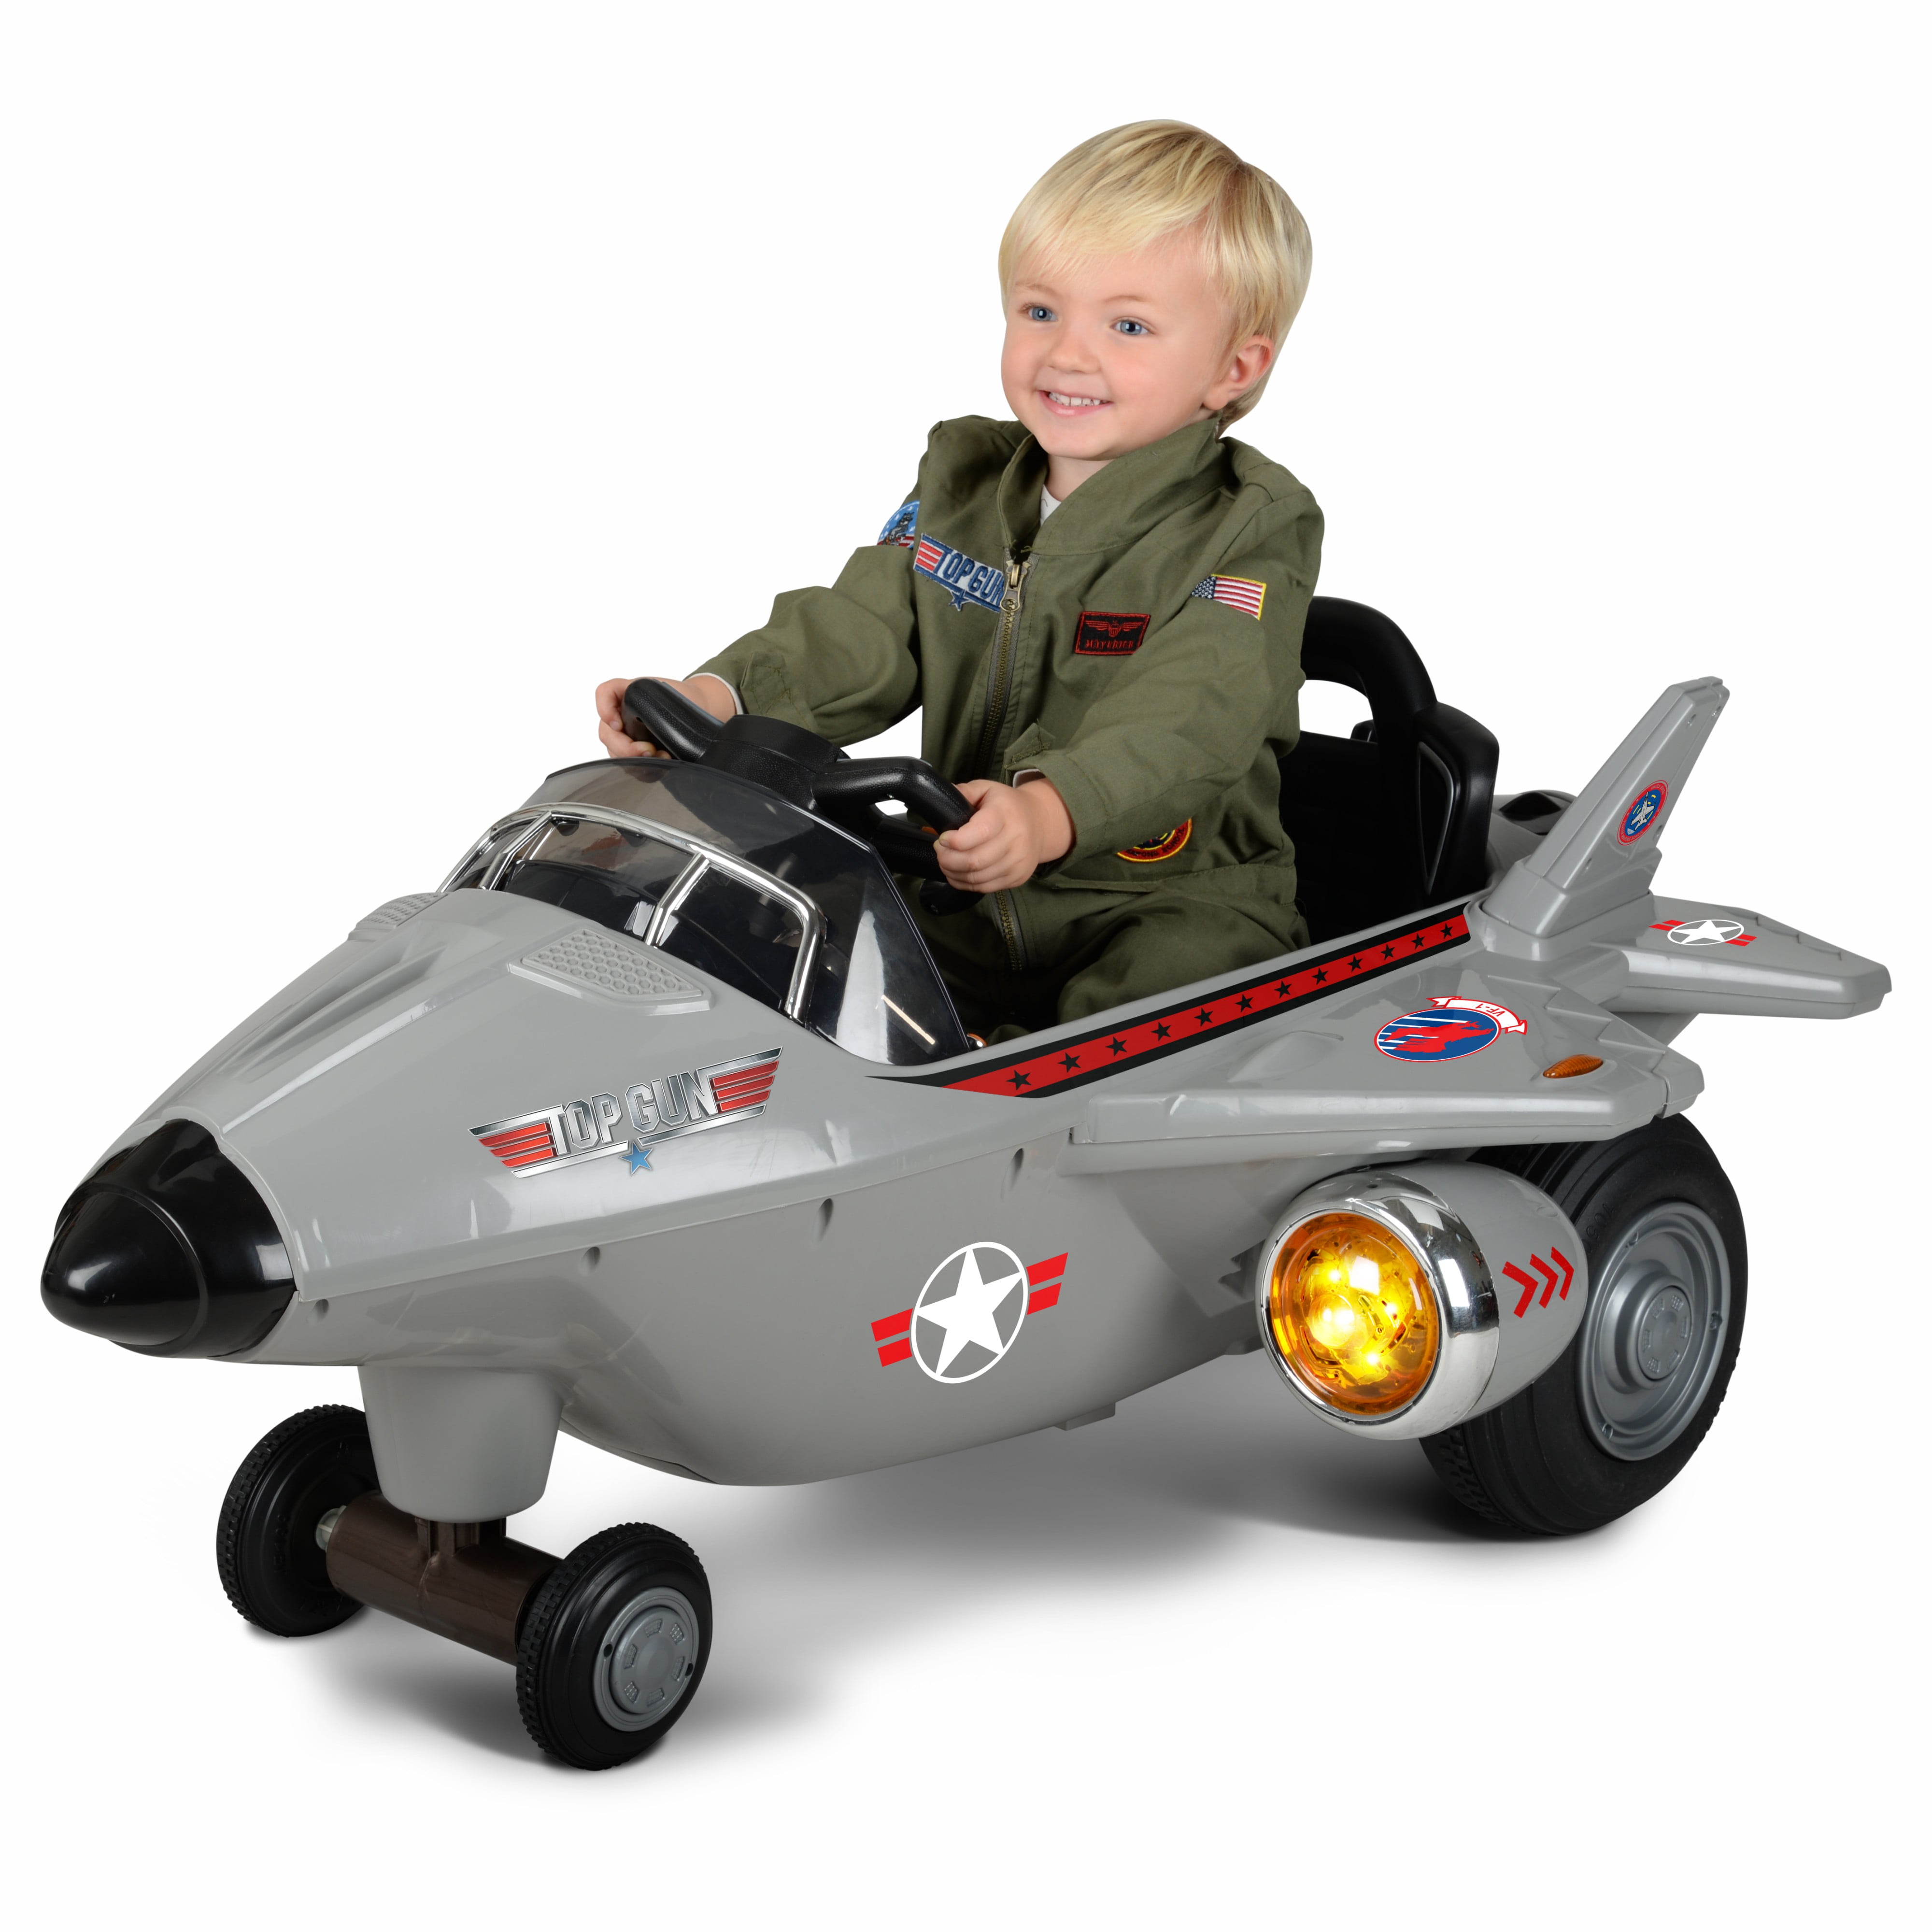 Top Gun Jet Toys